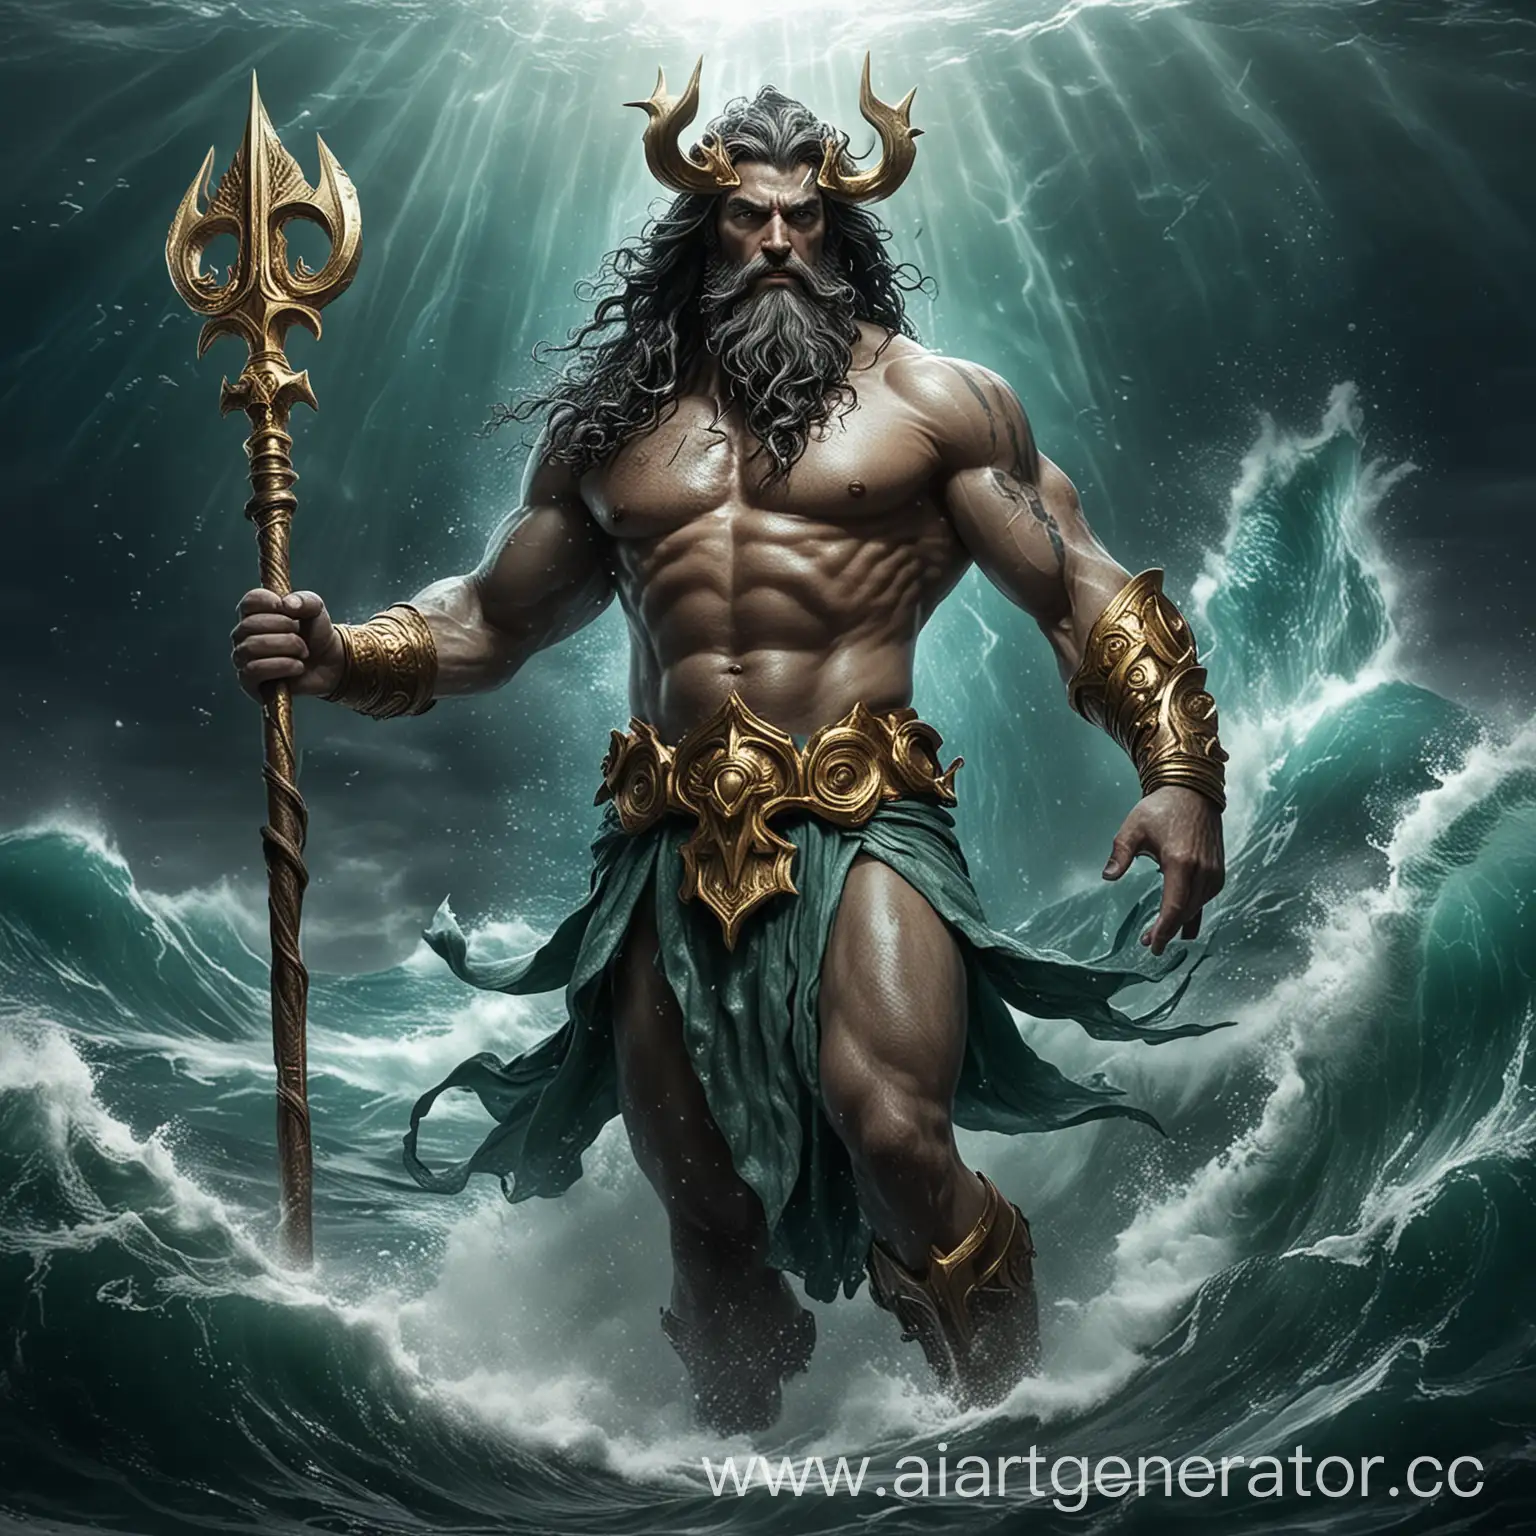 God of the seas (Poseidon)